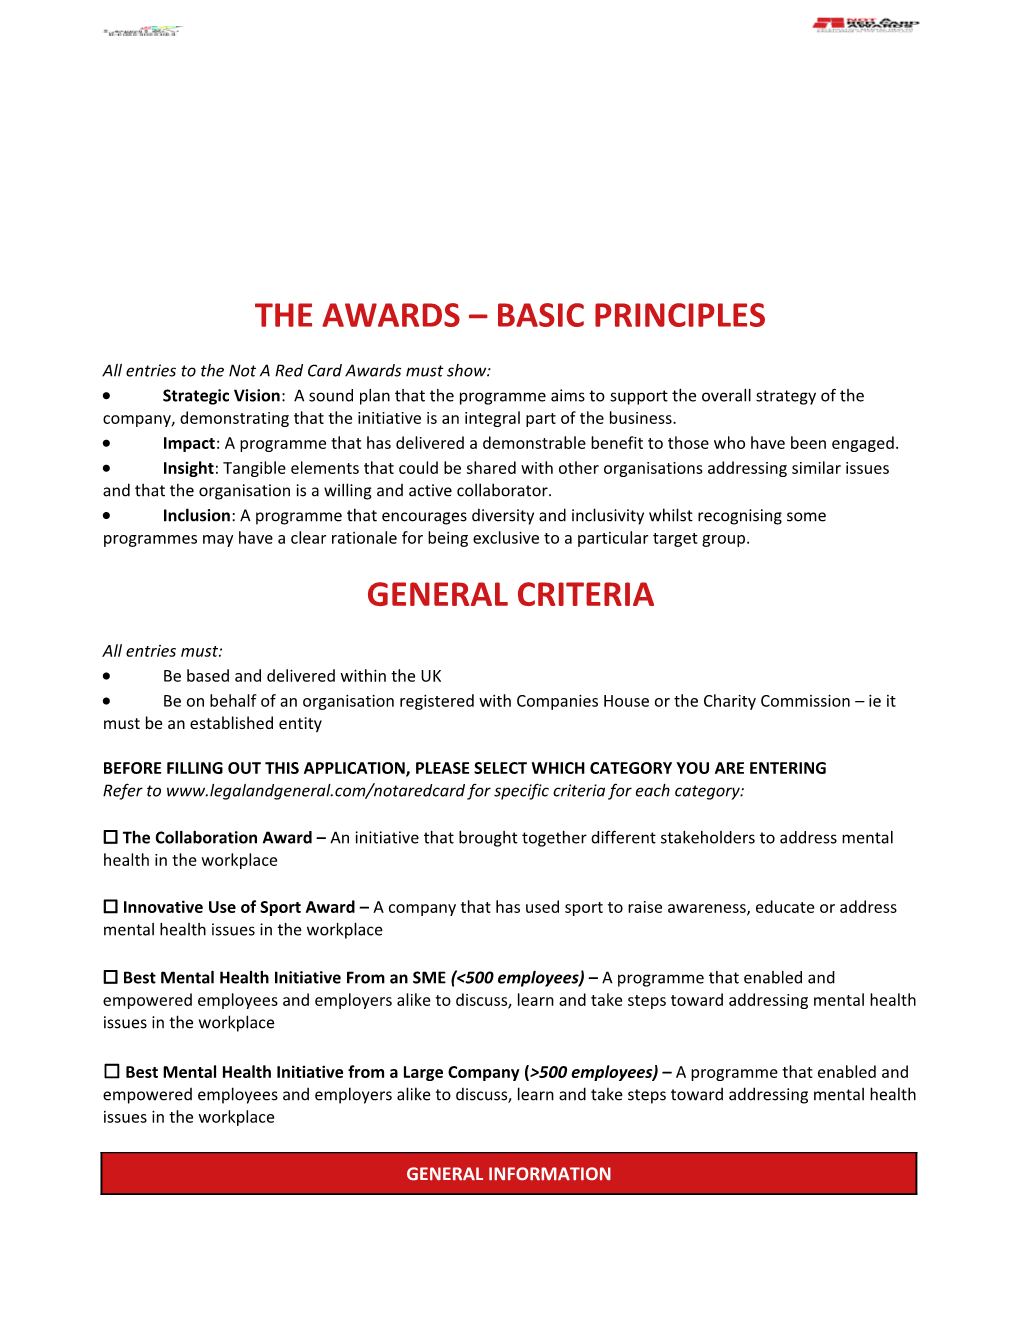 The Awards Basic Principles